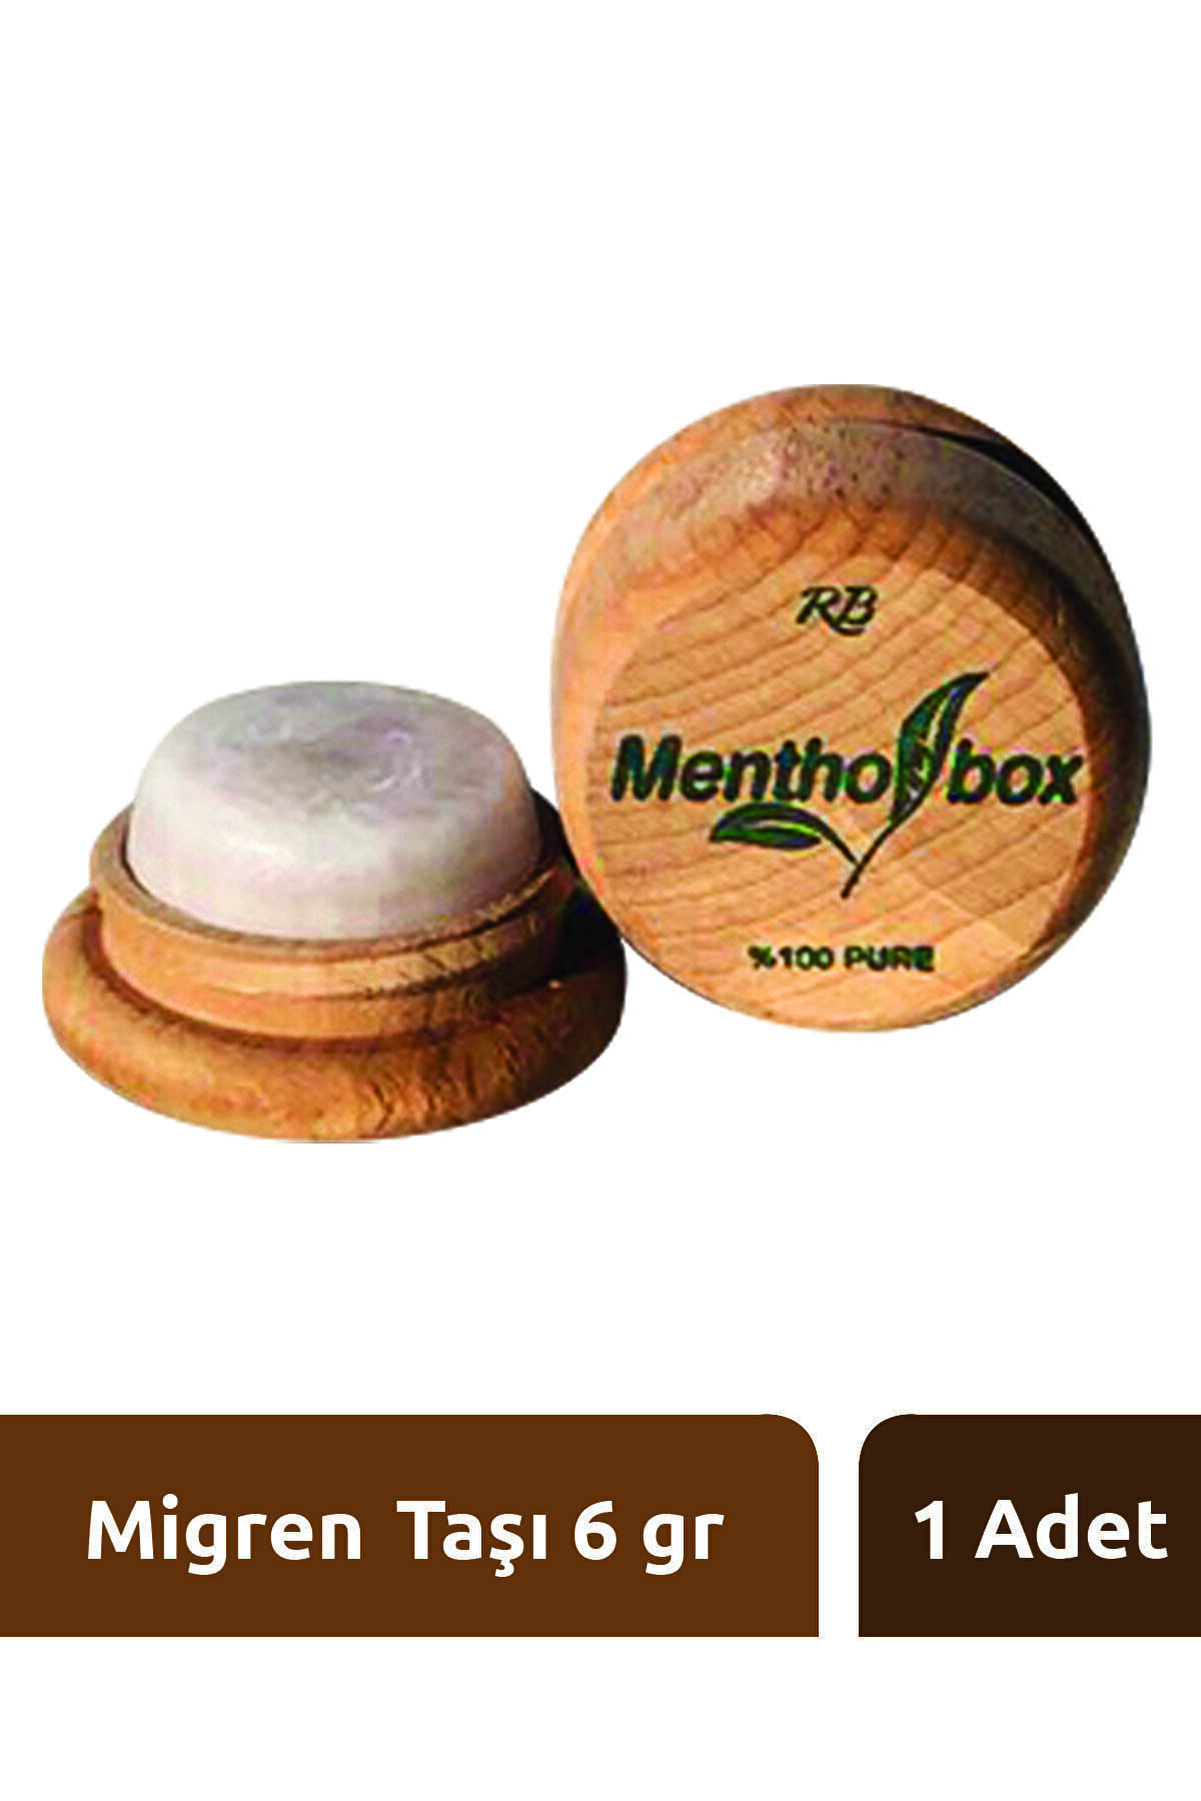 Menthol Box Mentol Spa 6 gr Migren Taşı Mentholbox